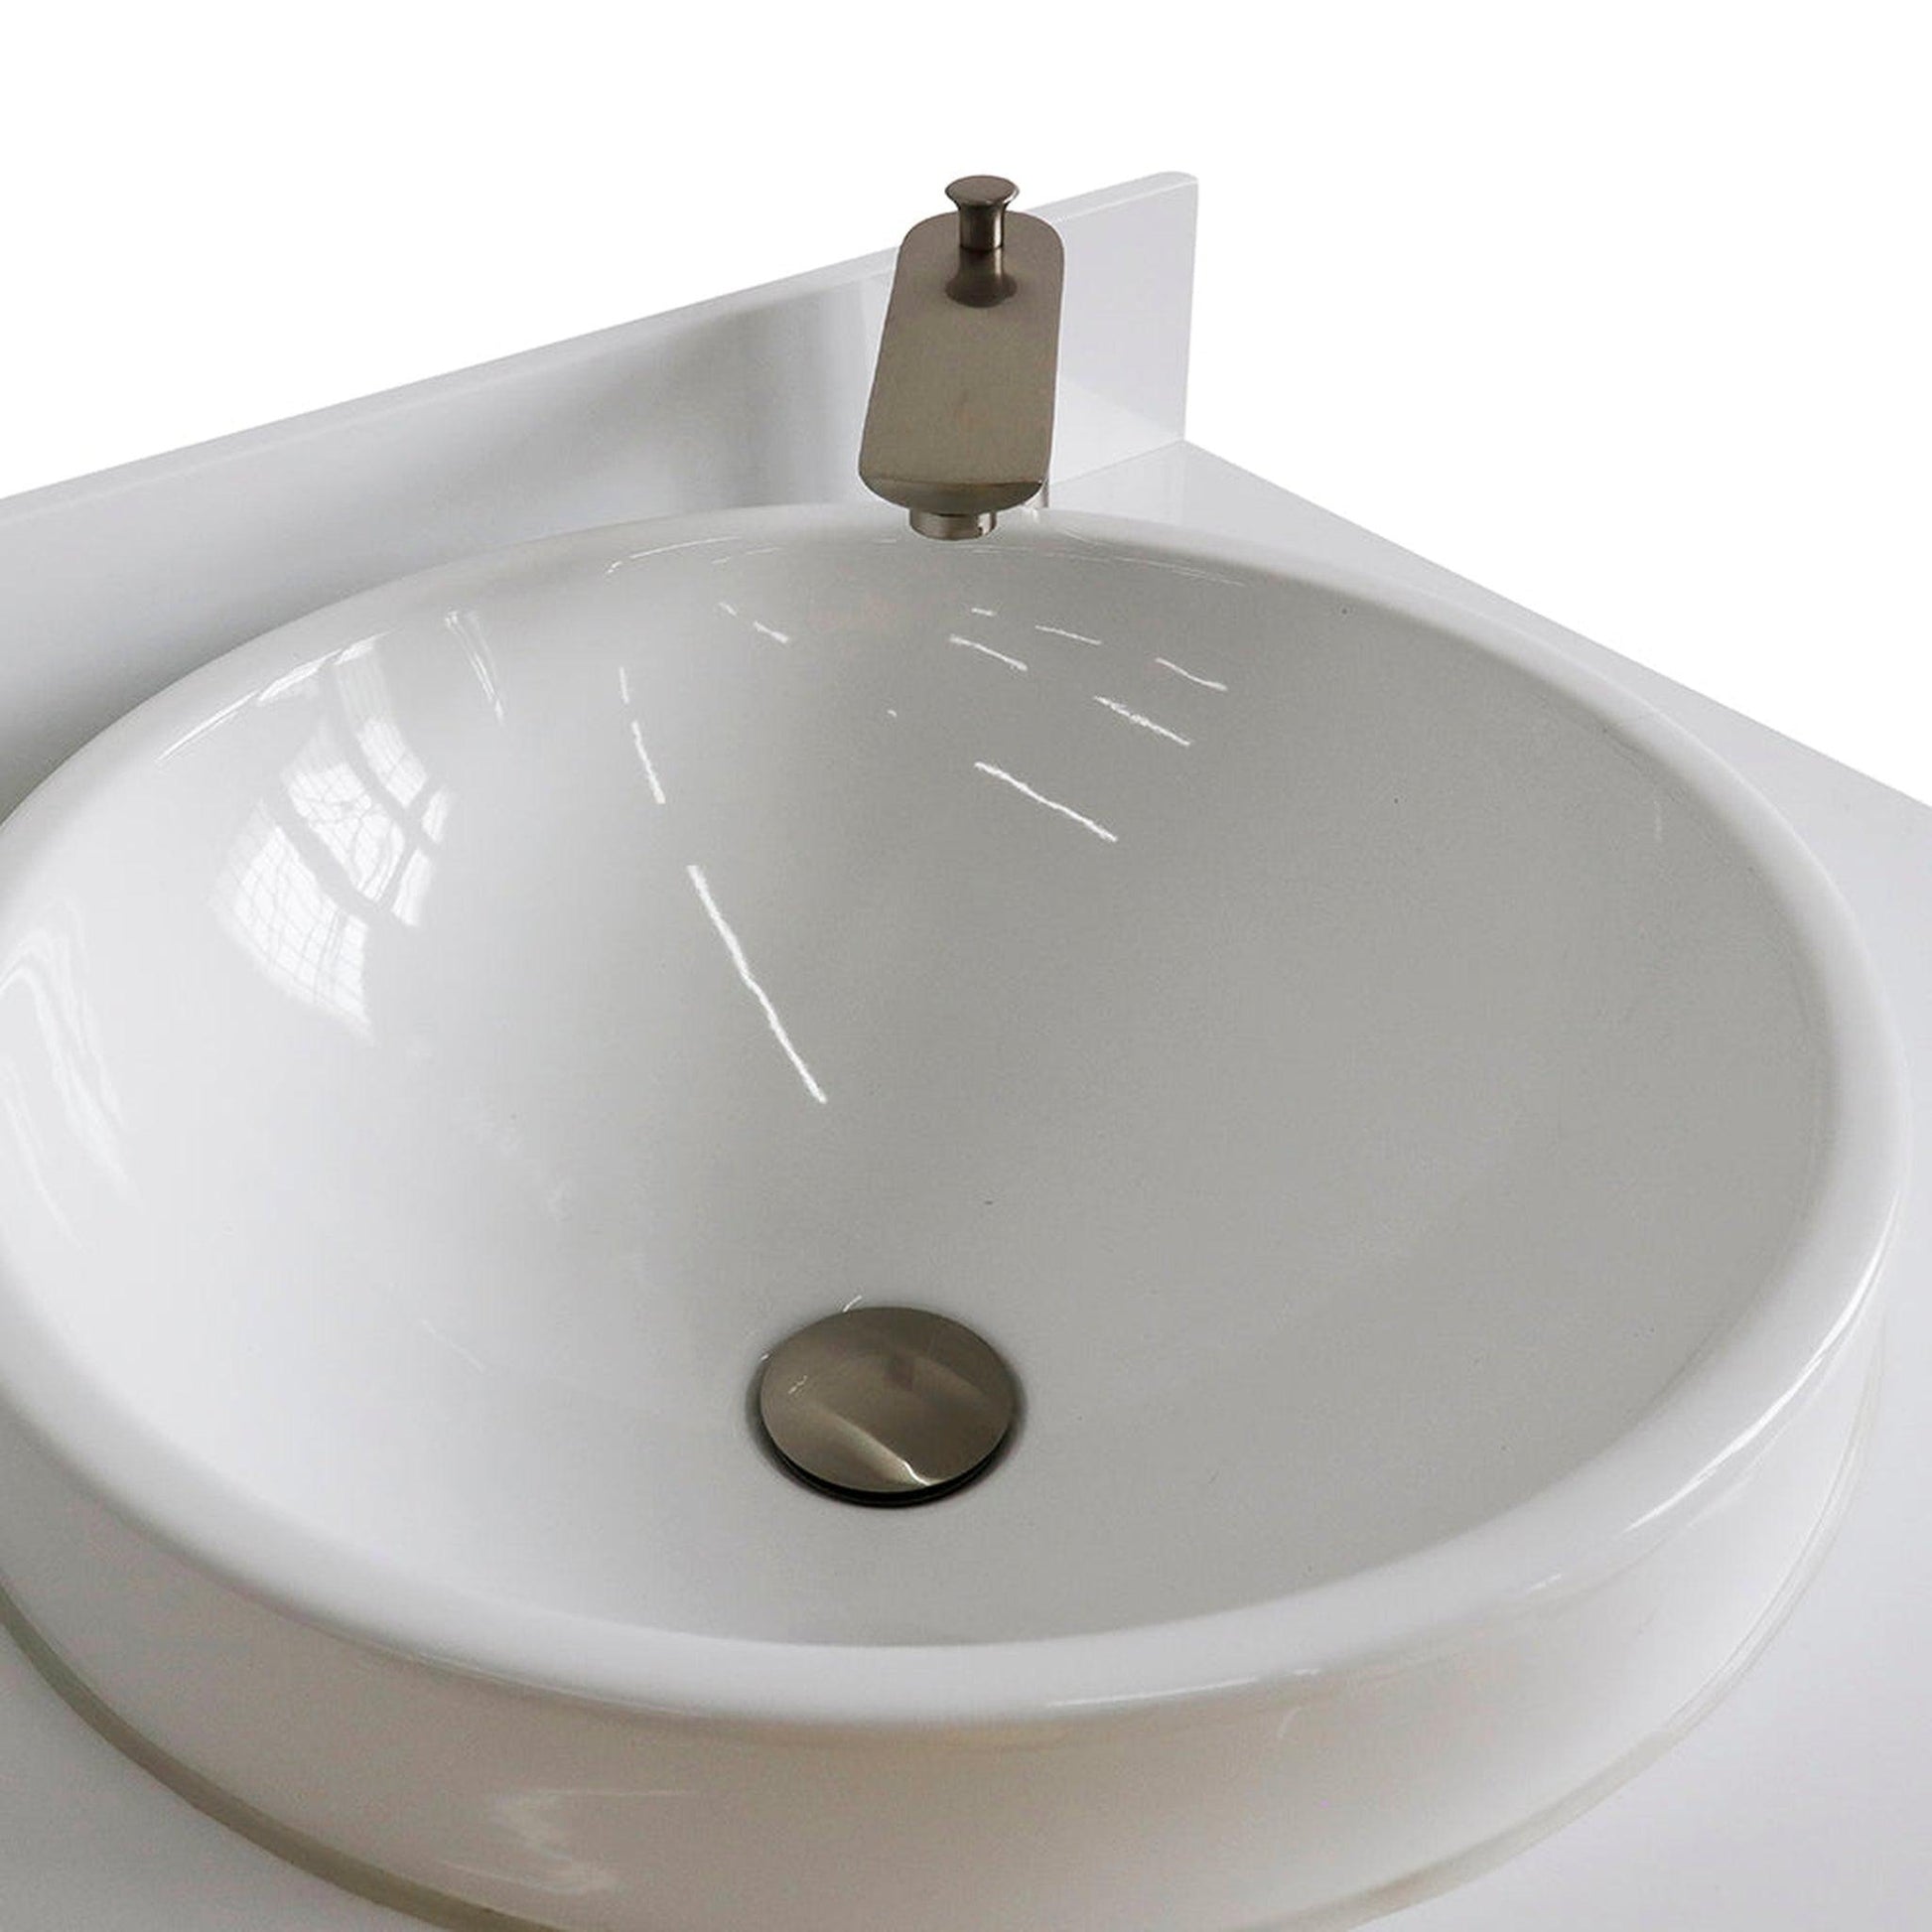 Bellaterra Home Terni 61" 4-Door 3-Drawer Dark Gray Freestanding Vanity Set With Ceramic Double Vessel Sink And White Quartz Top